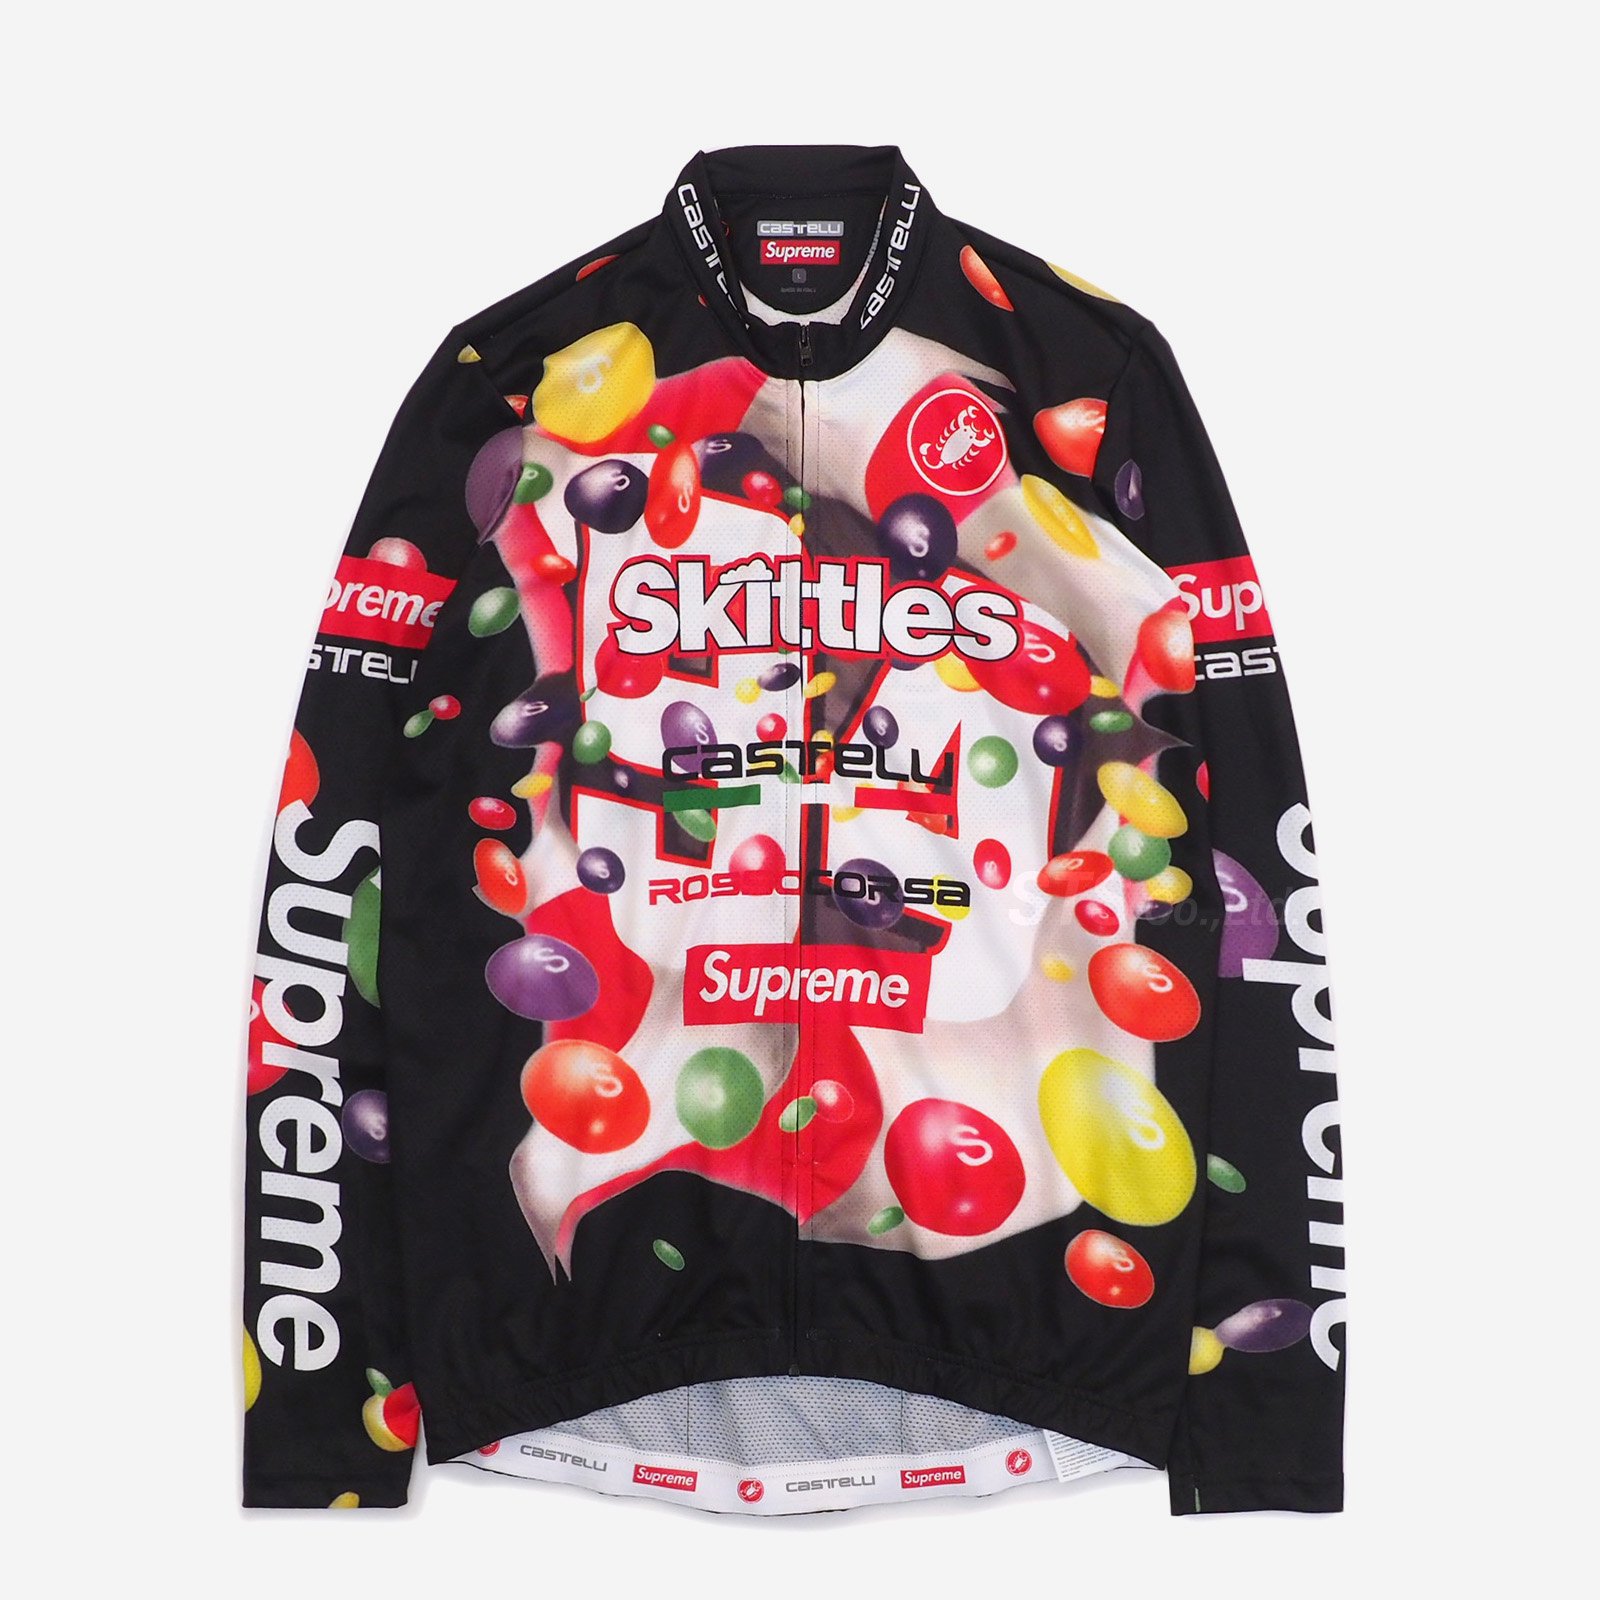 Supreme/Skittles/Castelli L/S Cycling Jersey - UG.SHAFT